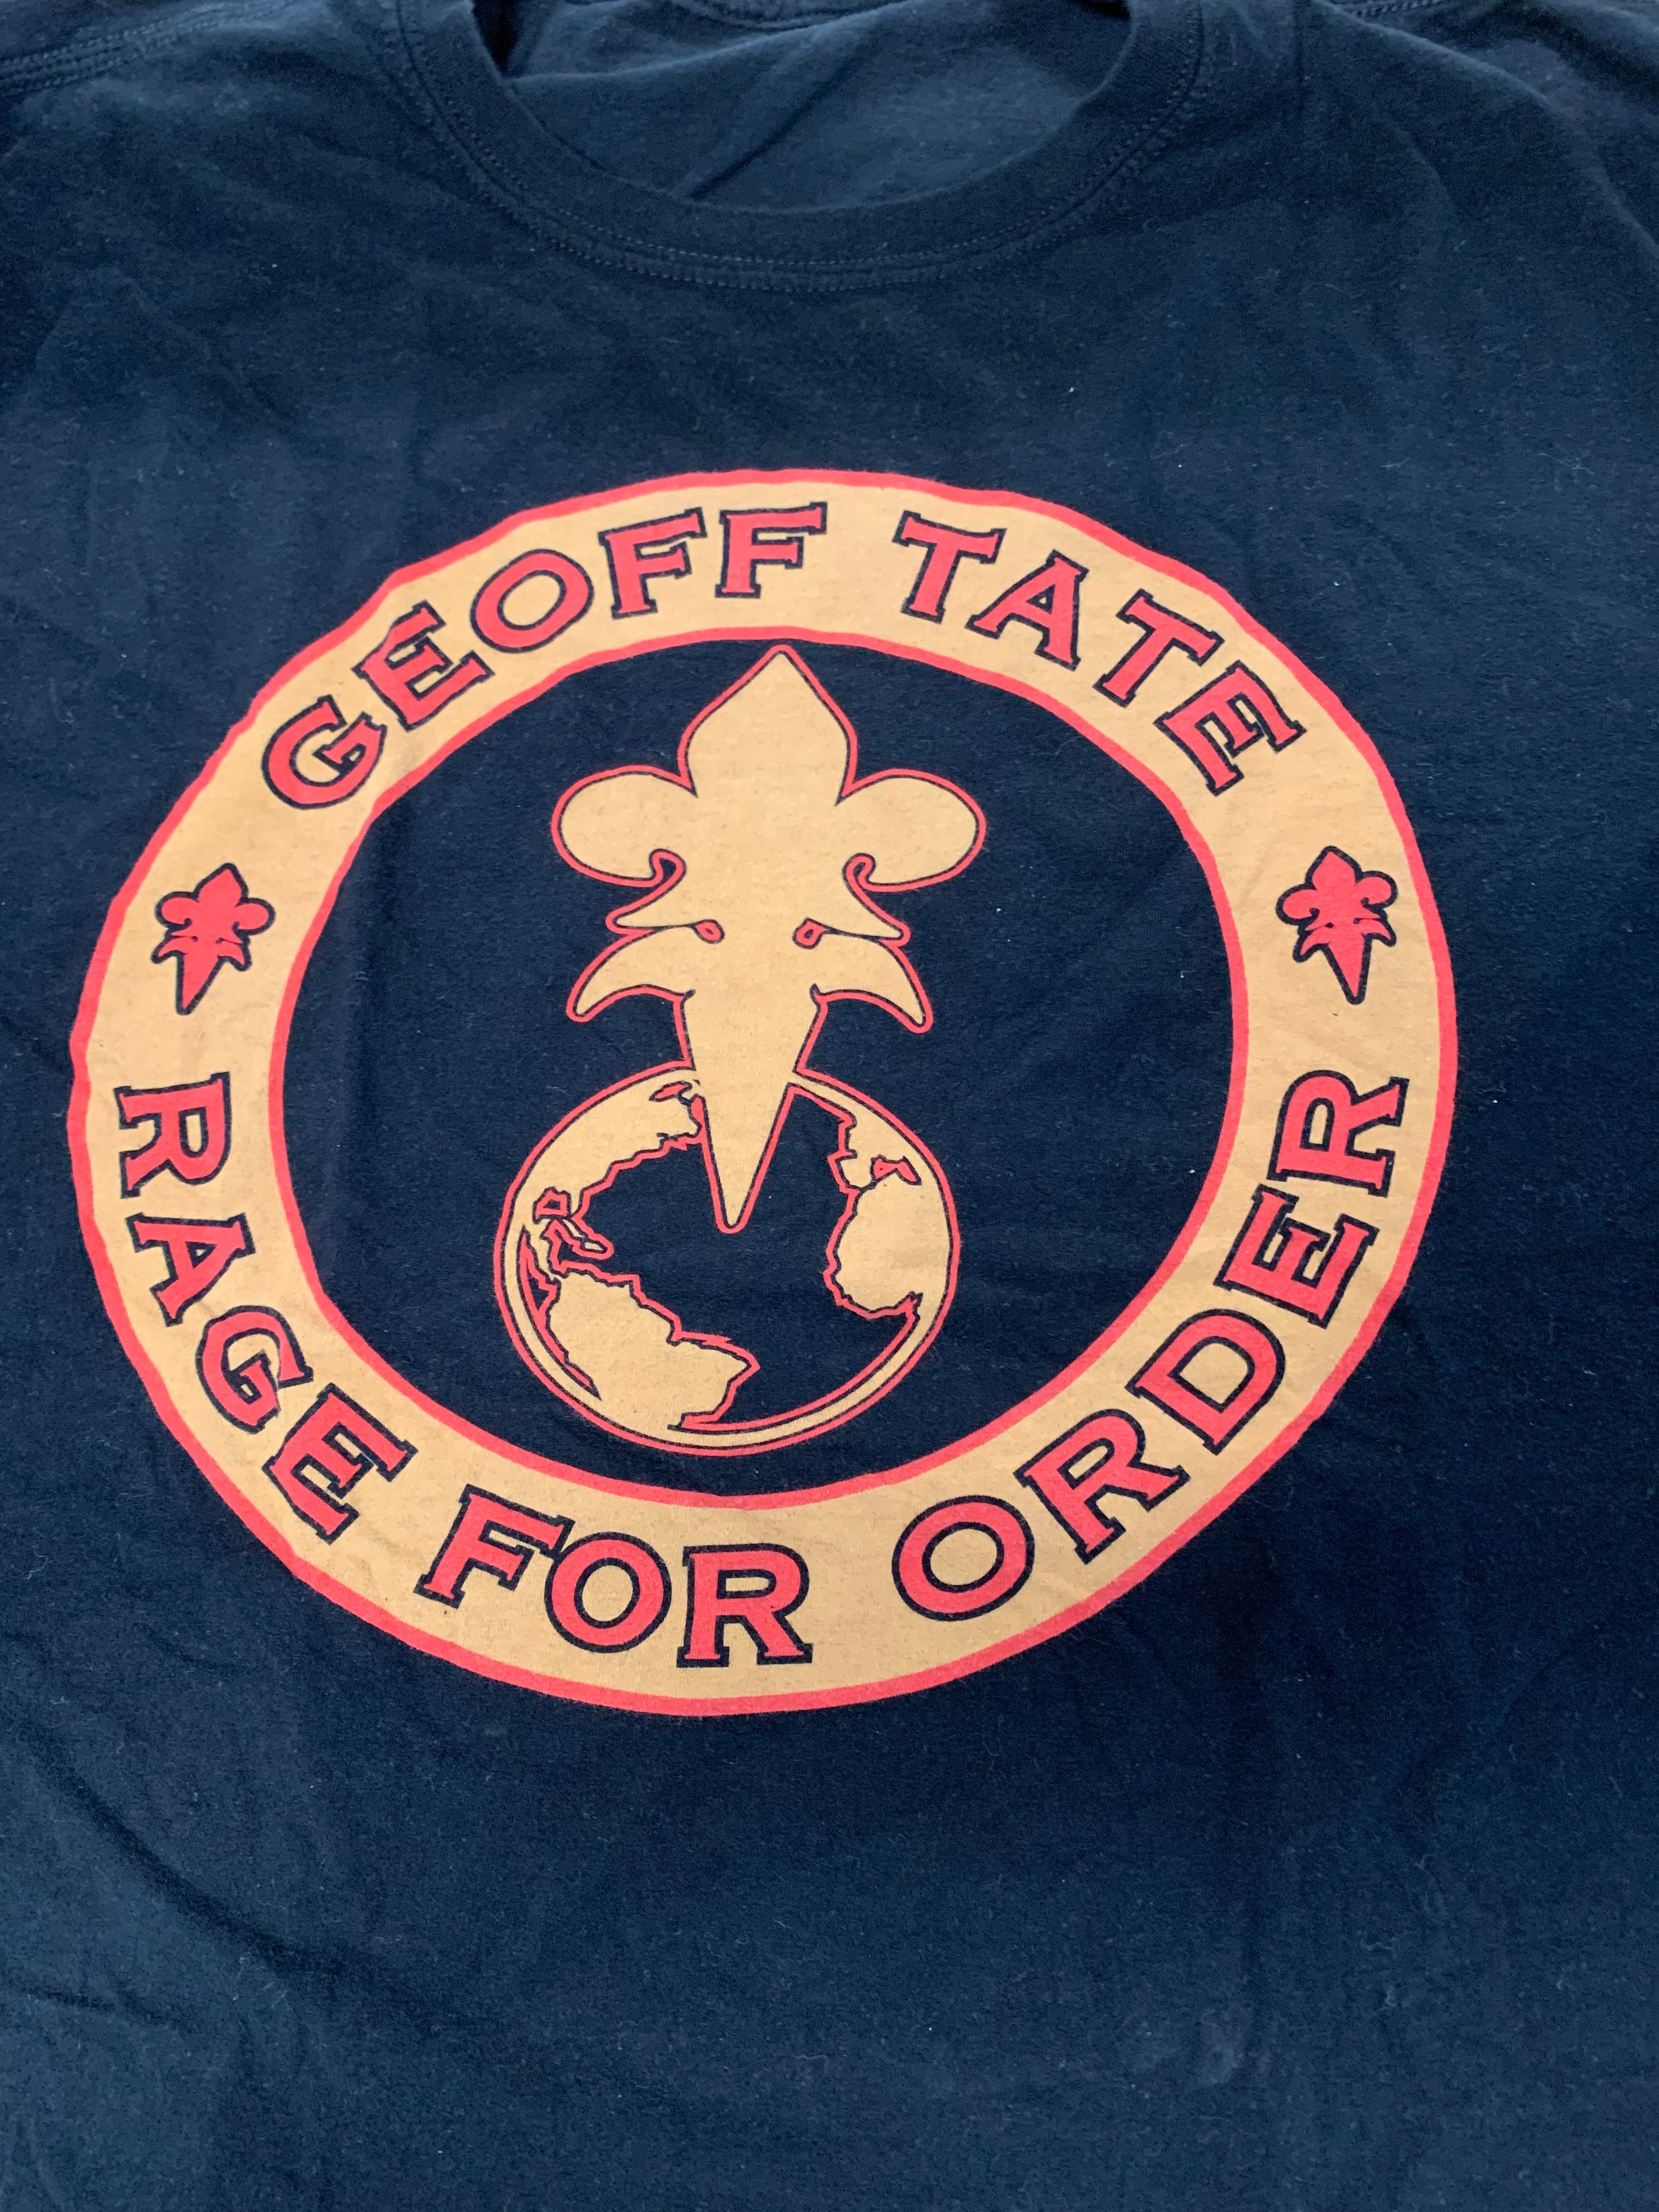 Geoff Tate Rage For Order Tour T-Shirt, Black, XL